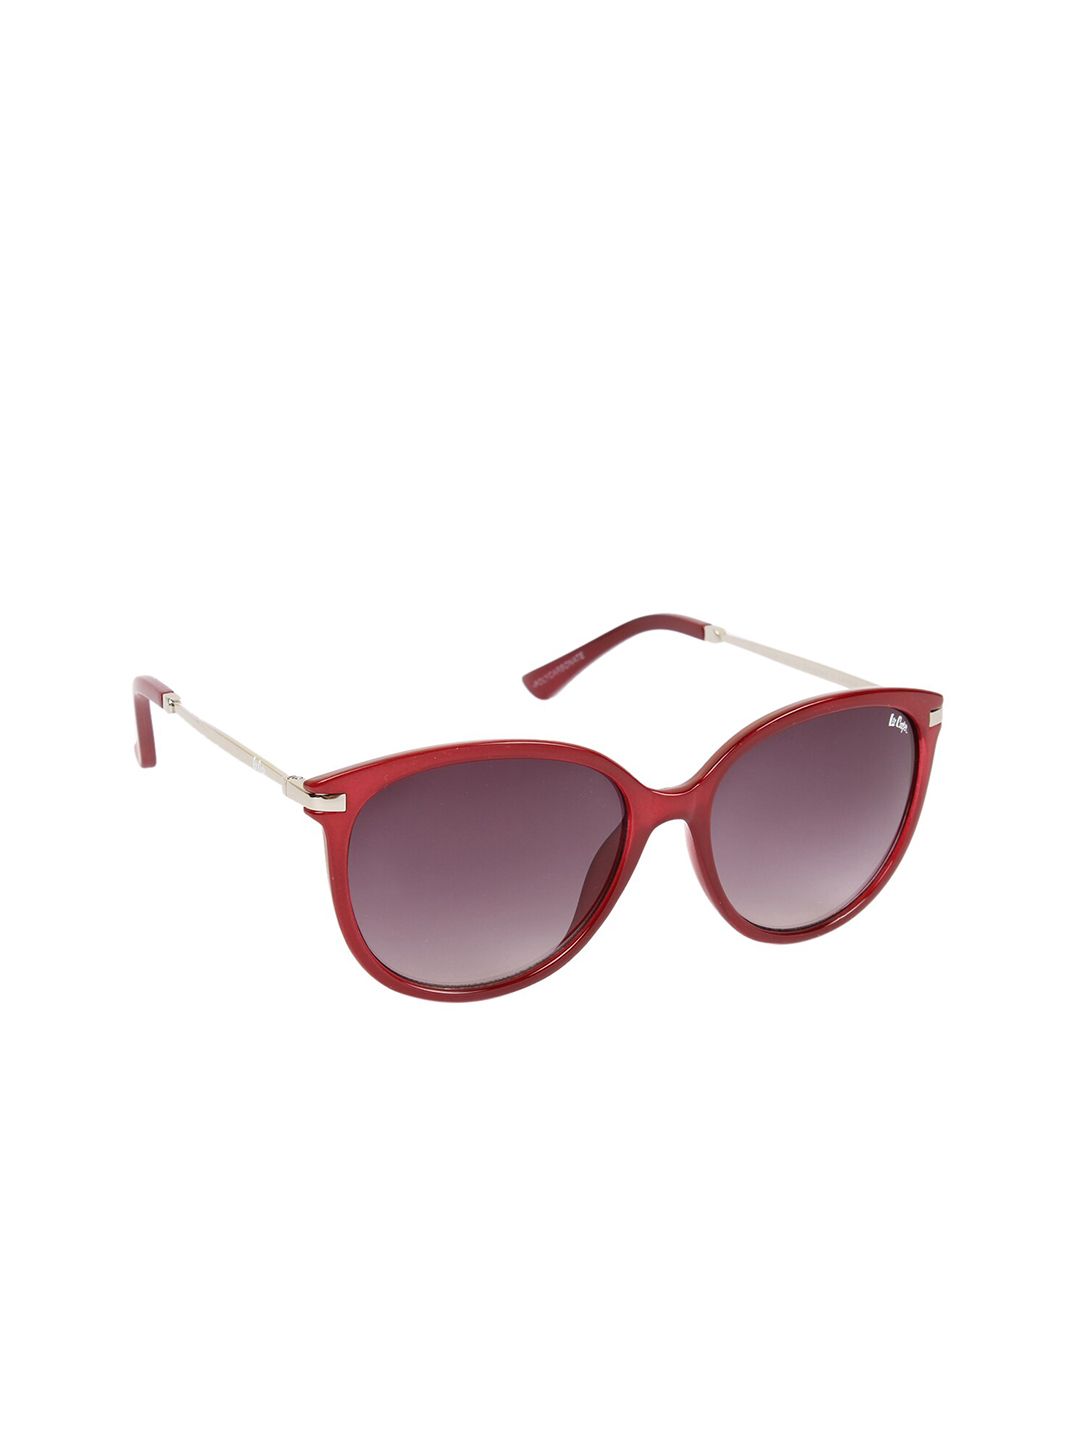 Lee Cooper Women's Red Sunglasses Price in India